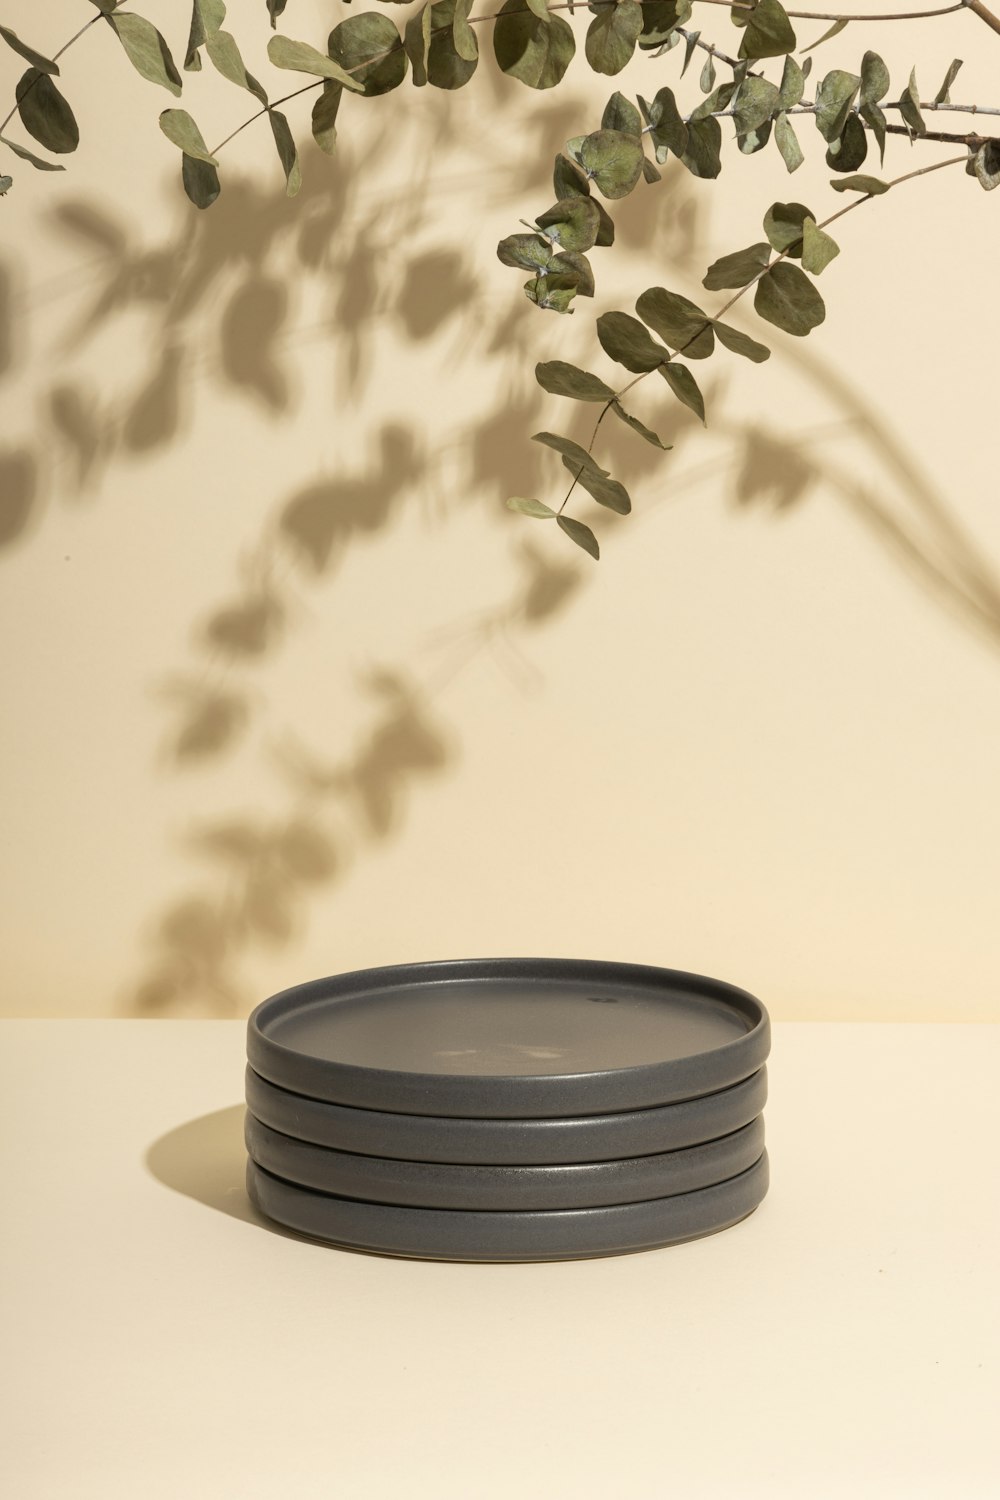 pianta verde su vaso di ceramica bianca